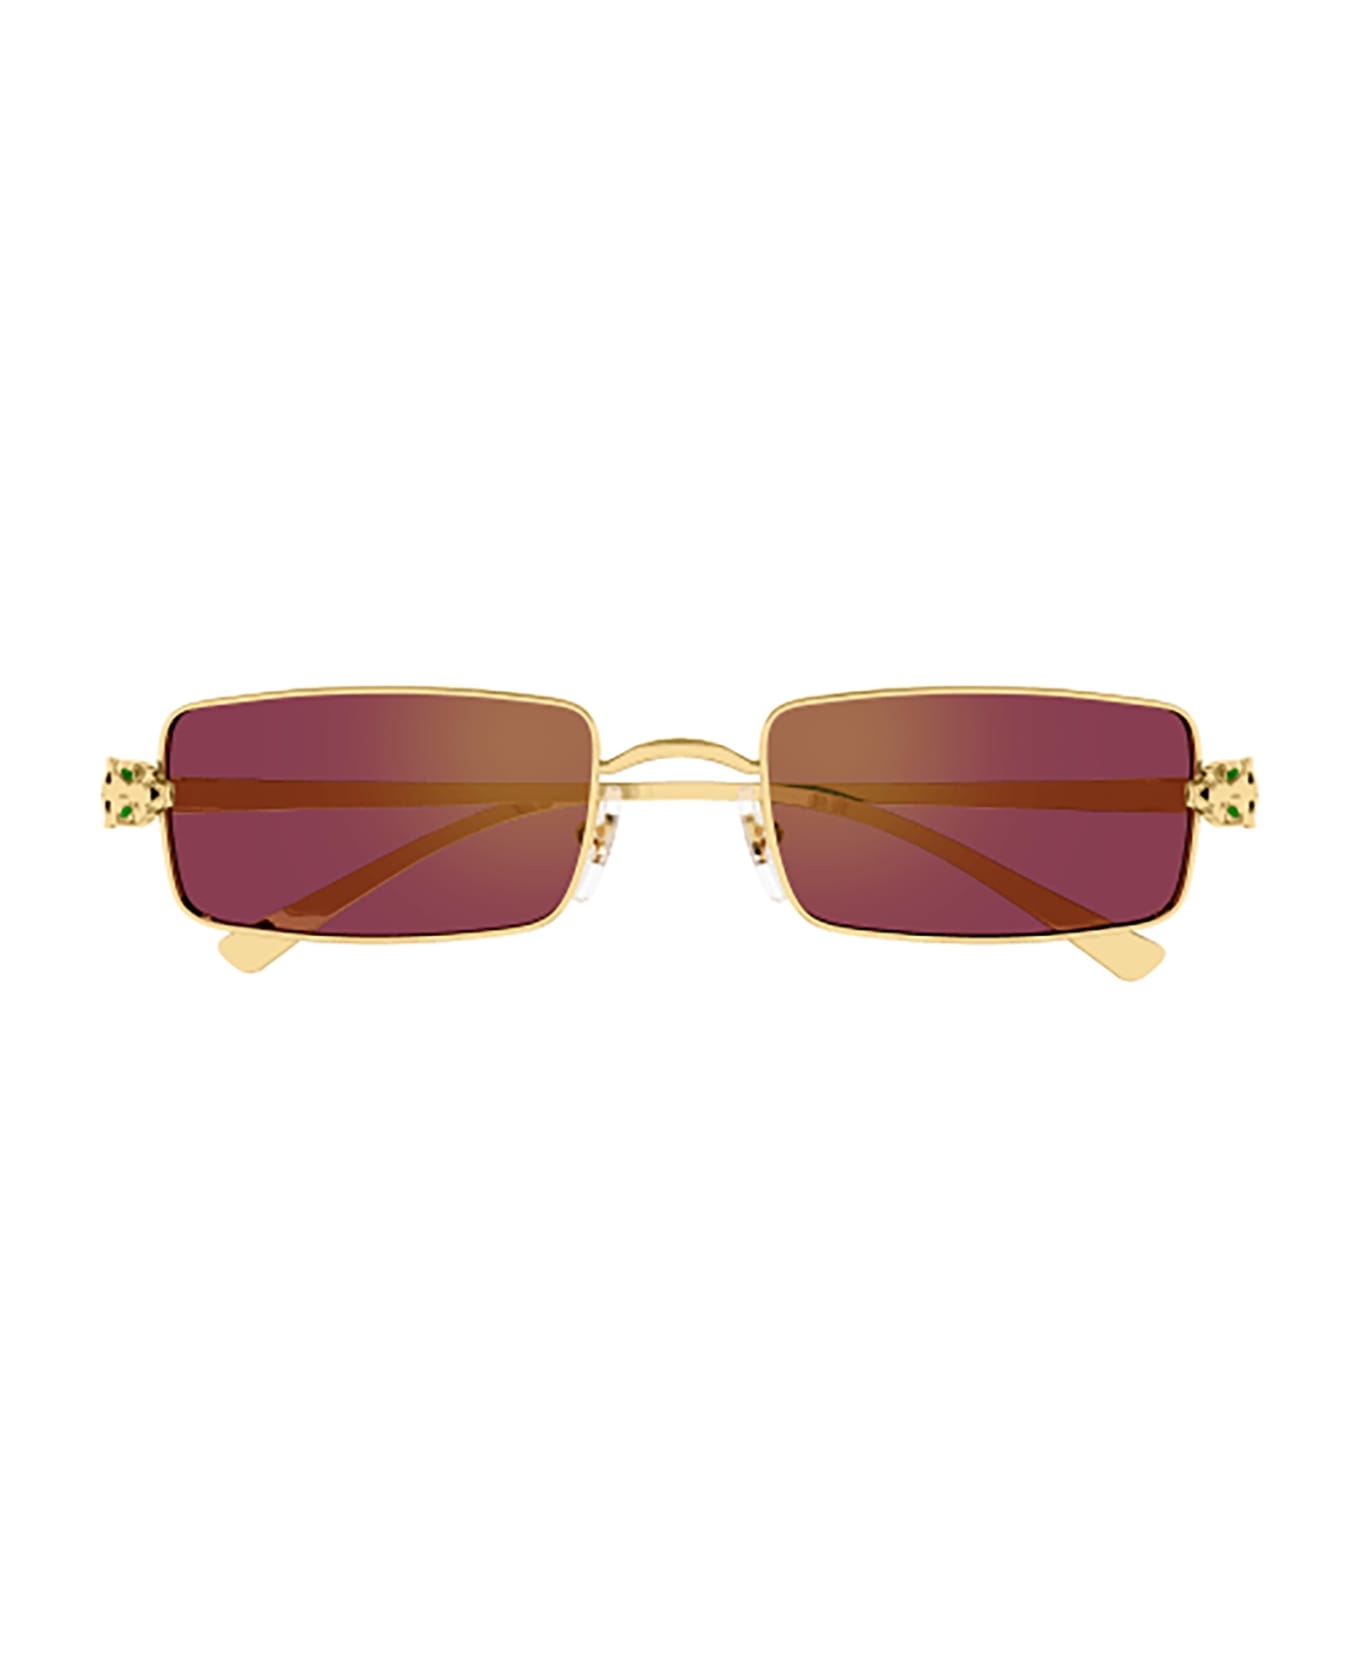 Cartier Eyewear Ct0473s Sunglasses - 002 GOLD GOLD RED